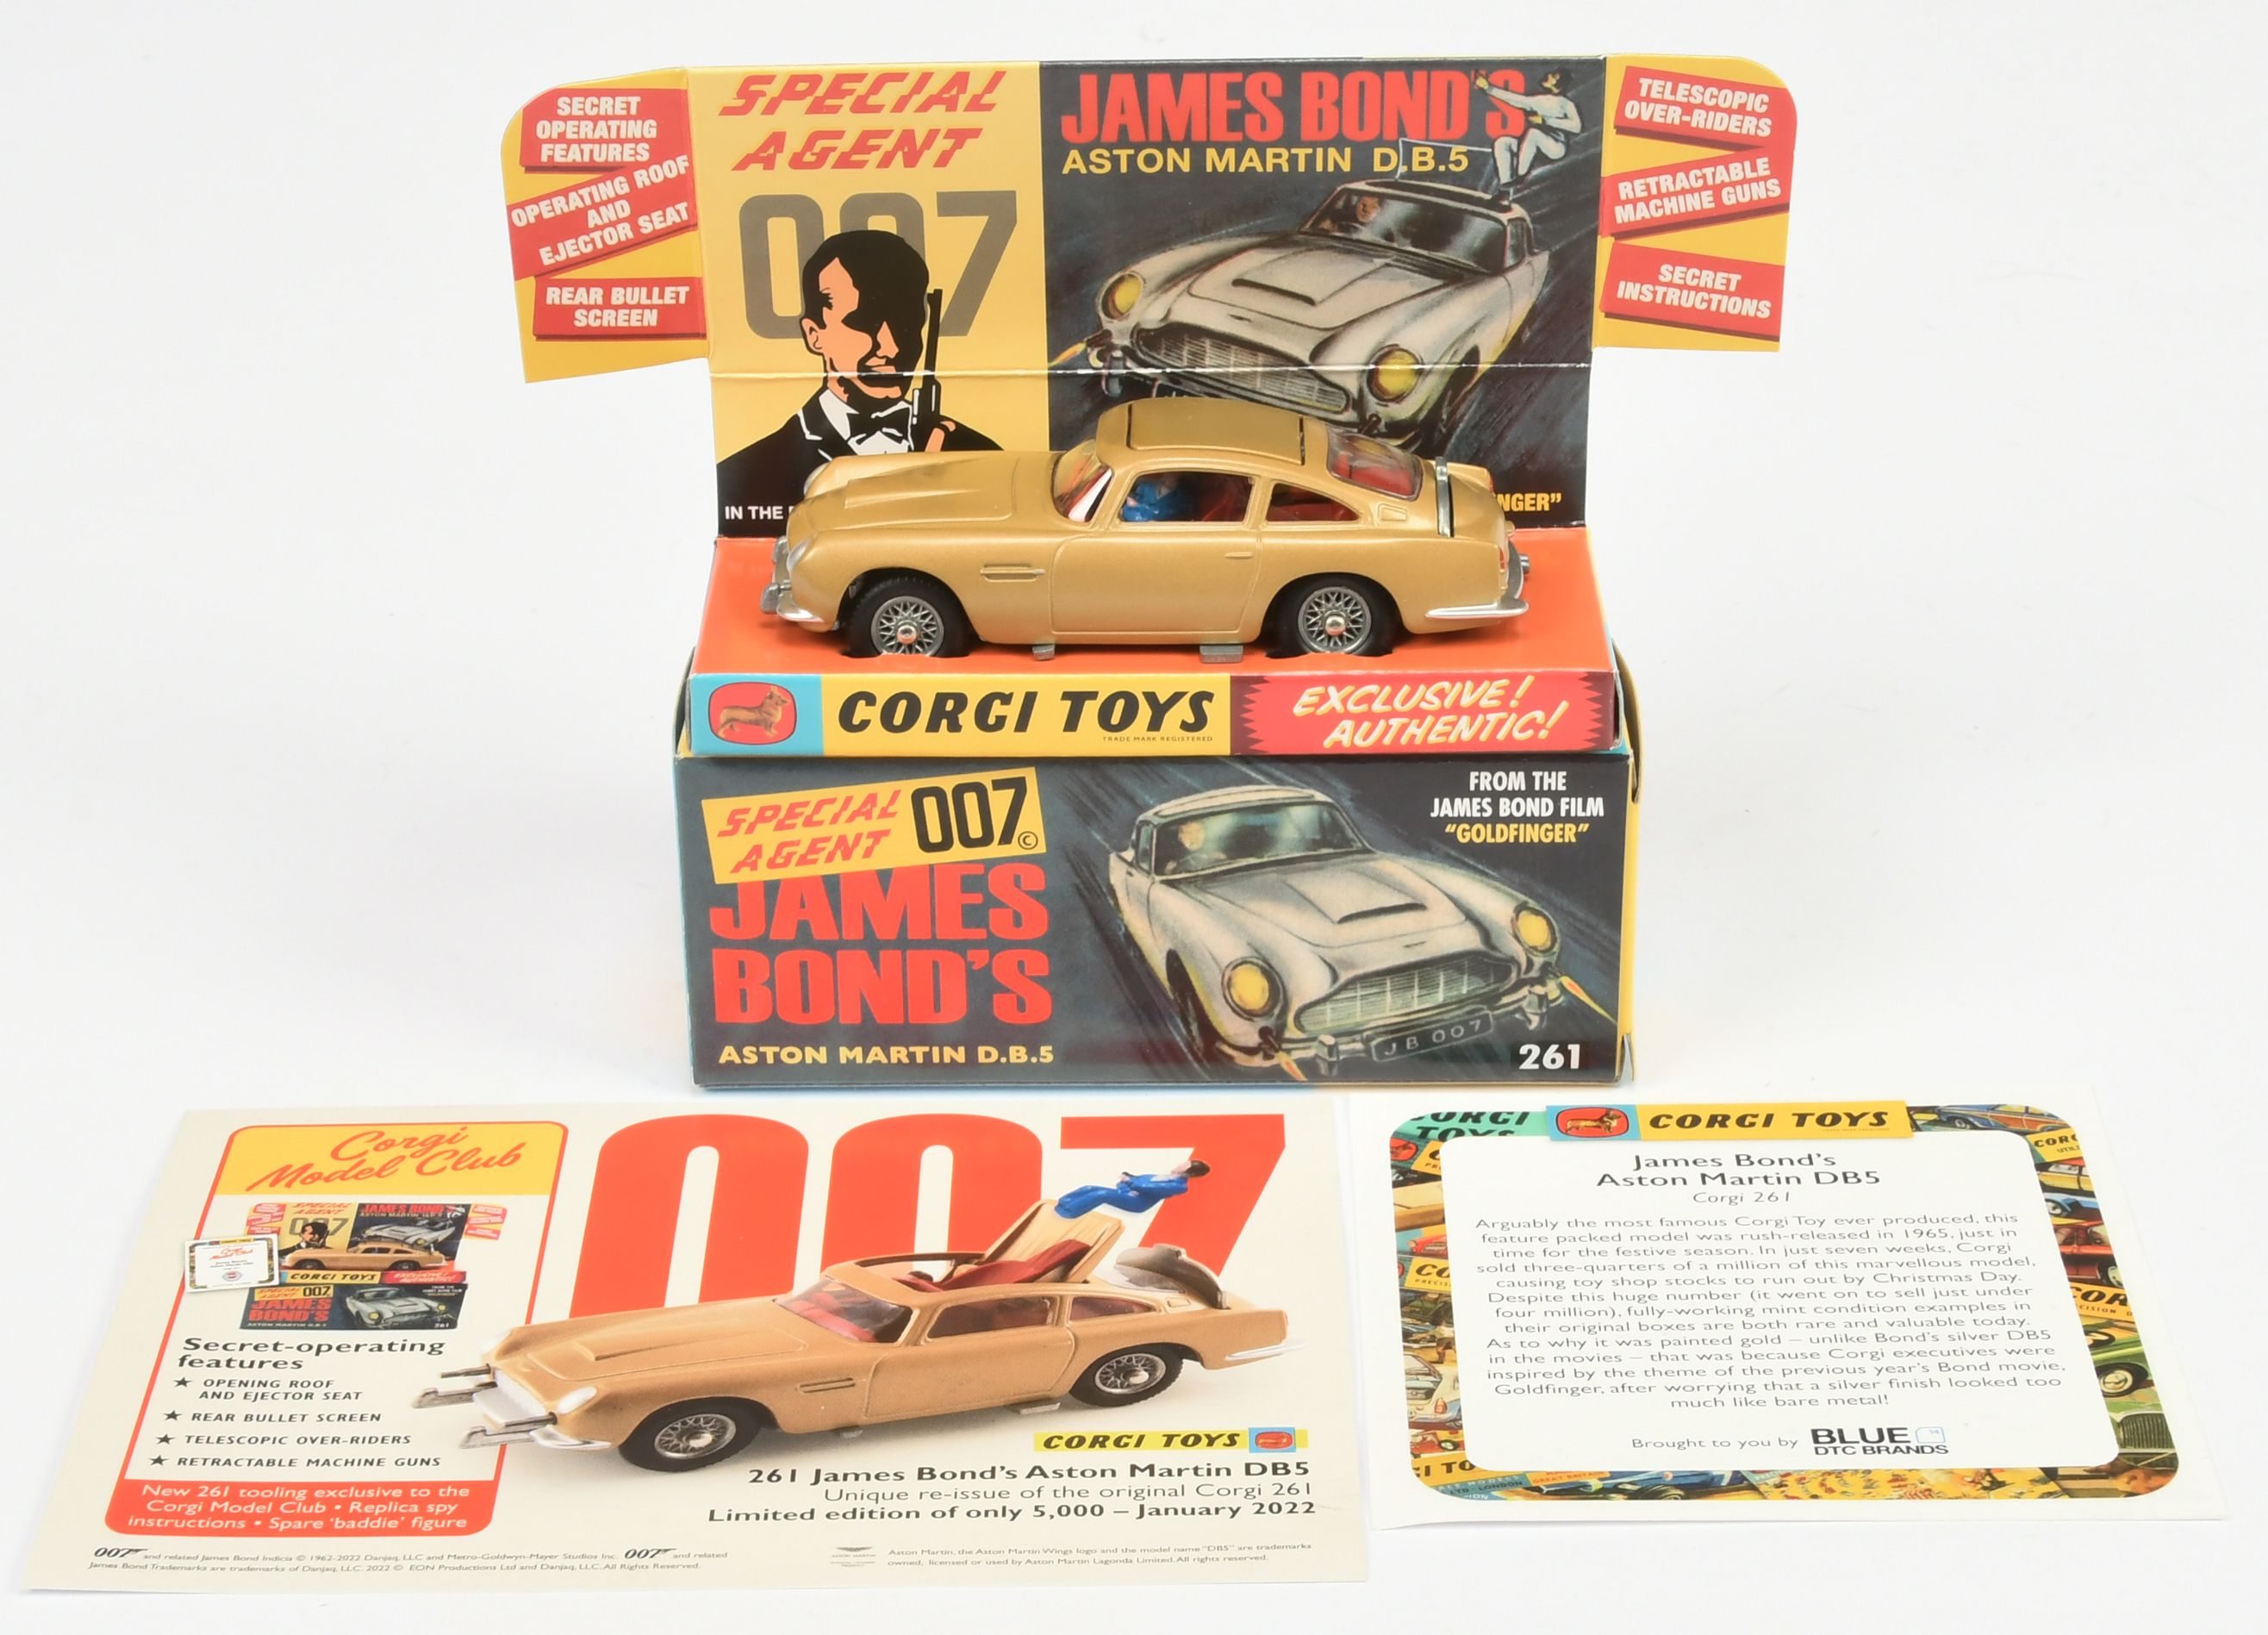 Corgi Toys 261 - "James Bond" Aston Martin DB5 taken from the film "Goldfinger" - finished in gol...